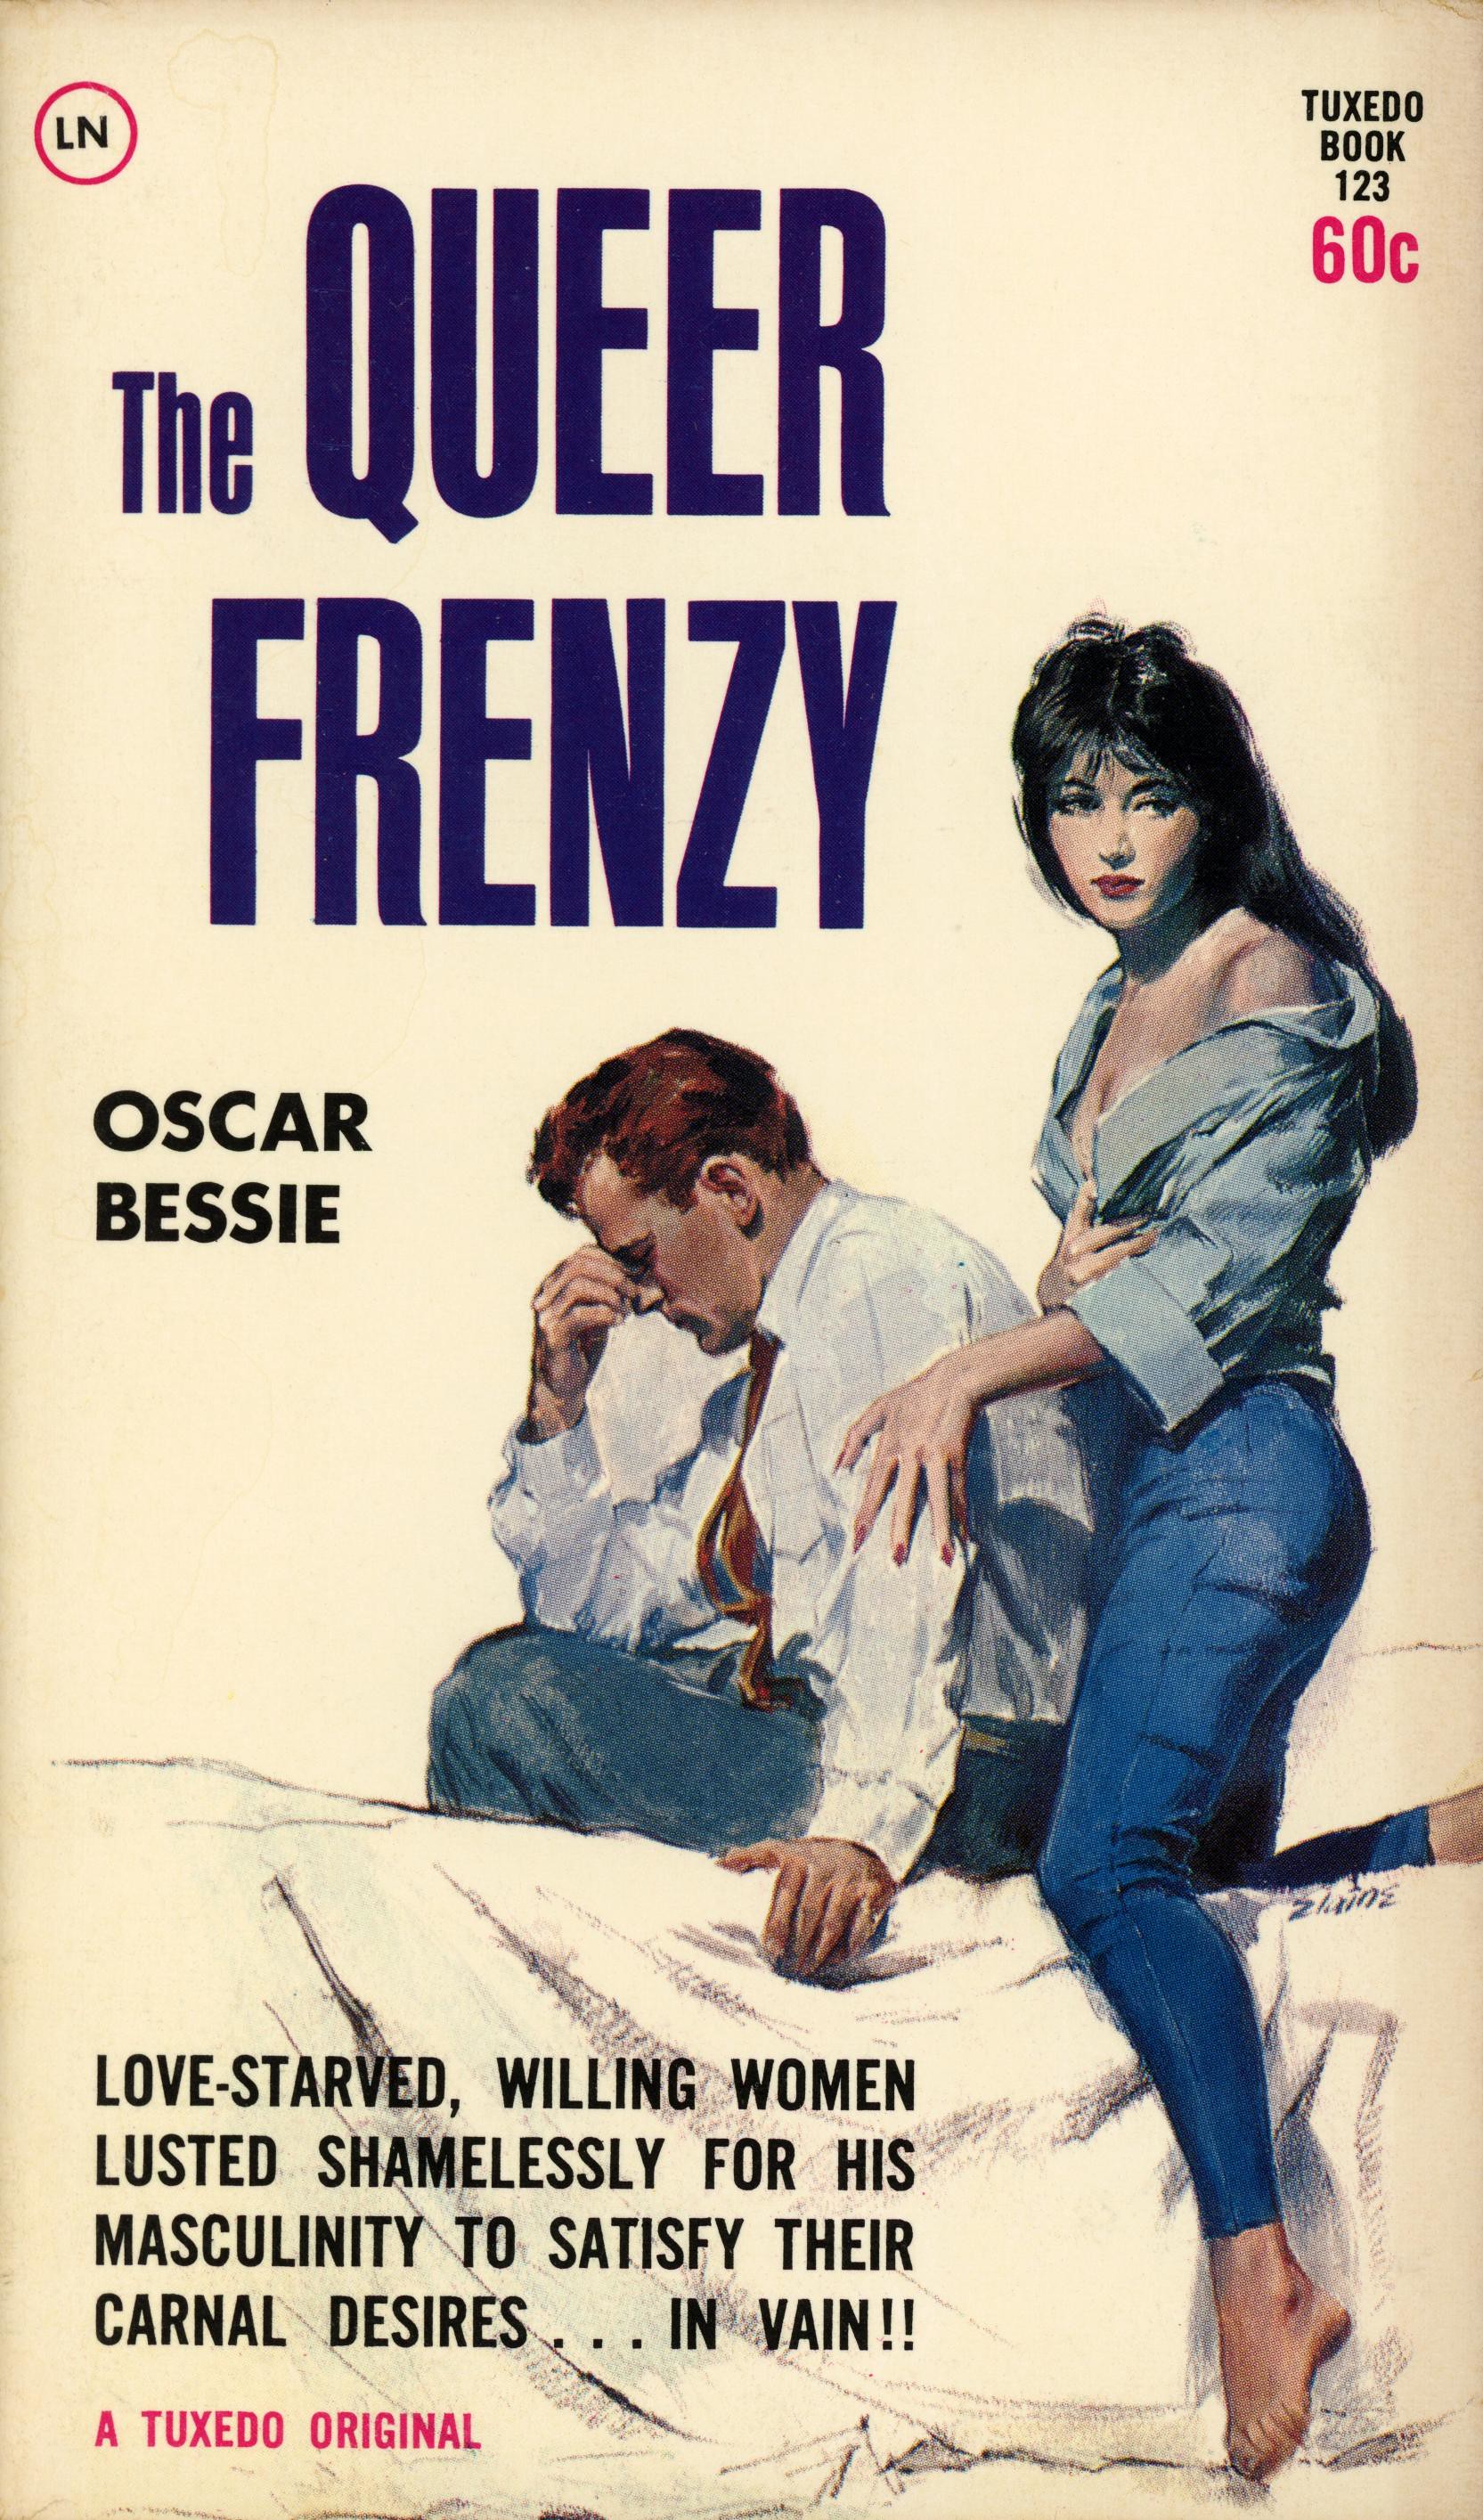 28762238455-tuxedo-books-123-oscar-bessie-the-queer-frenzy